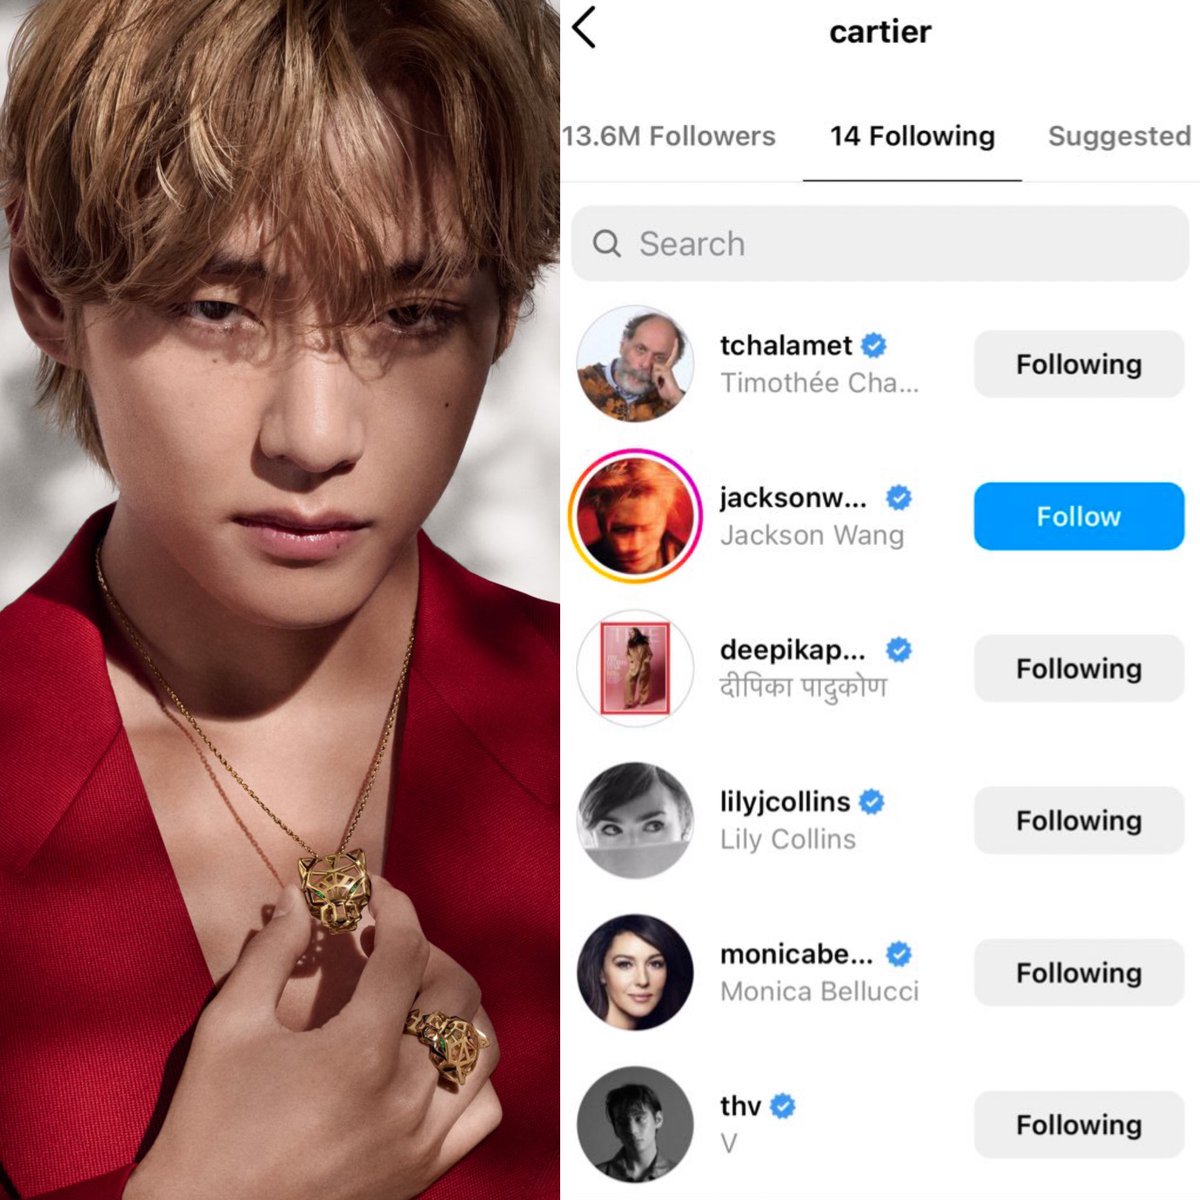 RT @taeguide: [INFO] Cartier has now started following their Global brand Ambassador Taehyung on instagram https://t.co/ZbqVlvKlqs